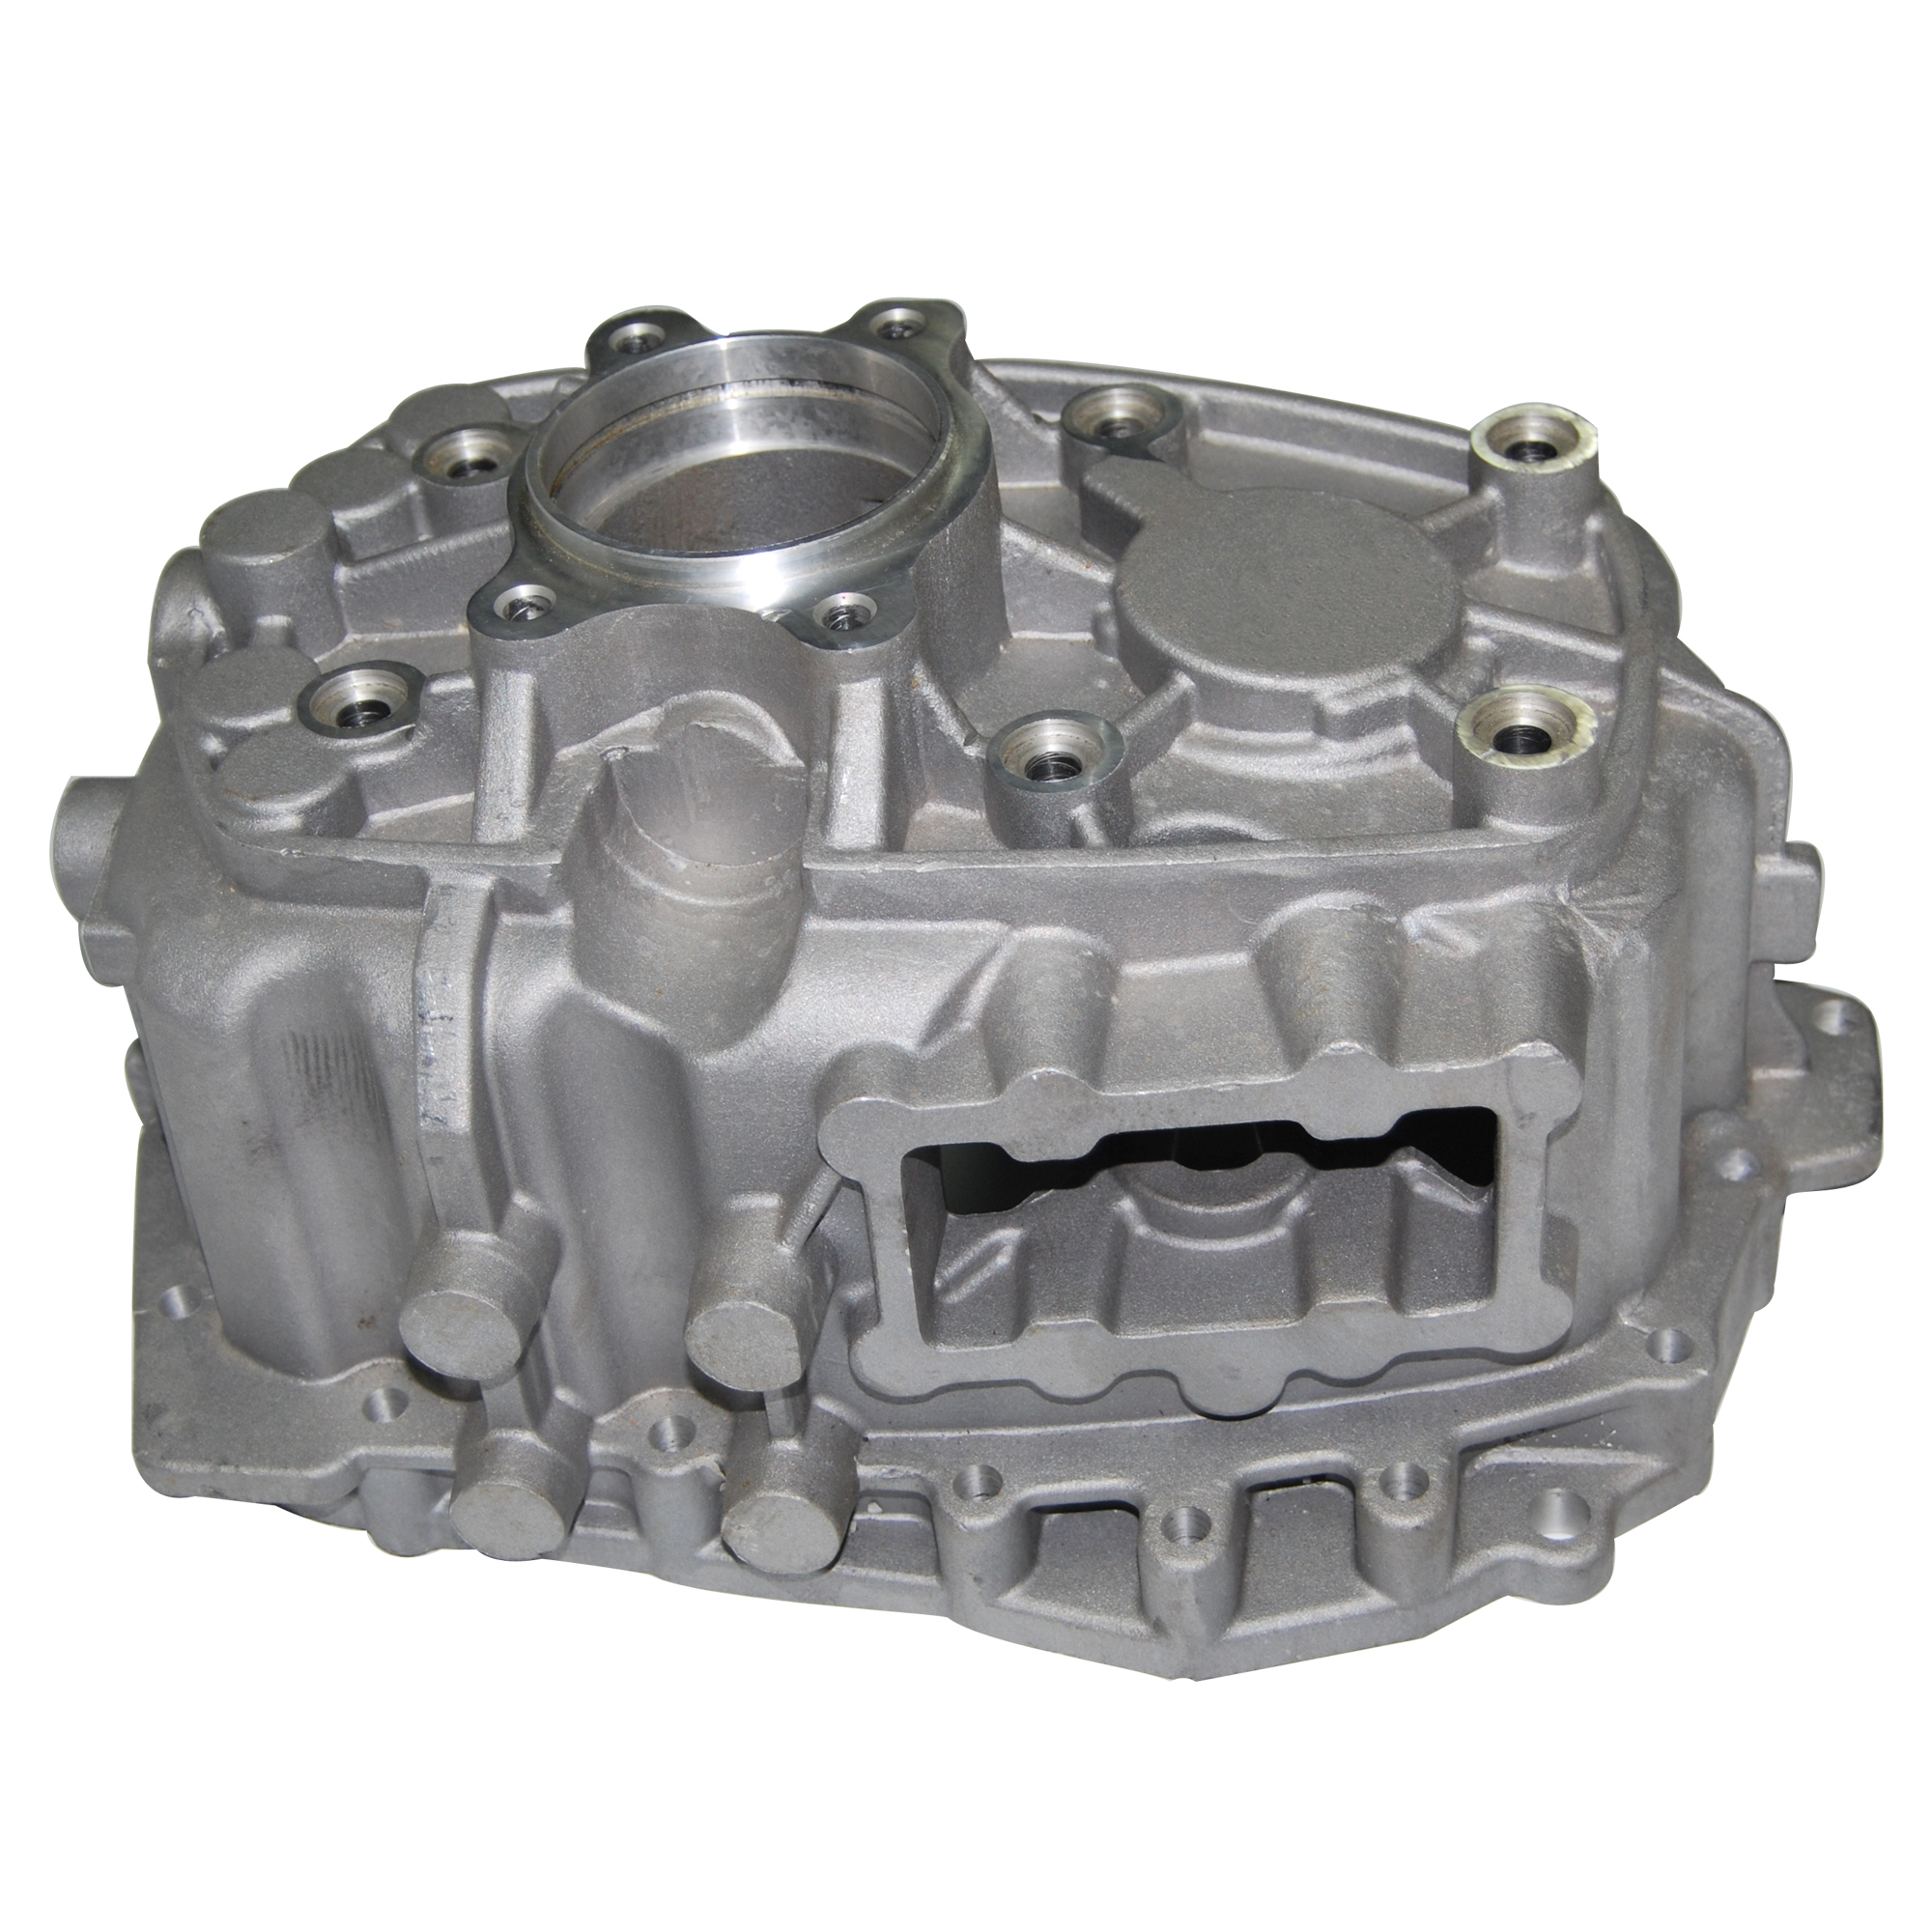 Matech Custom Cast Aluminum Low Pressure Casting Transmission Cover(图18)